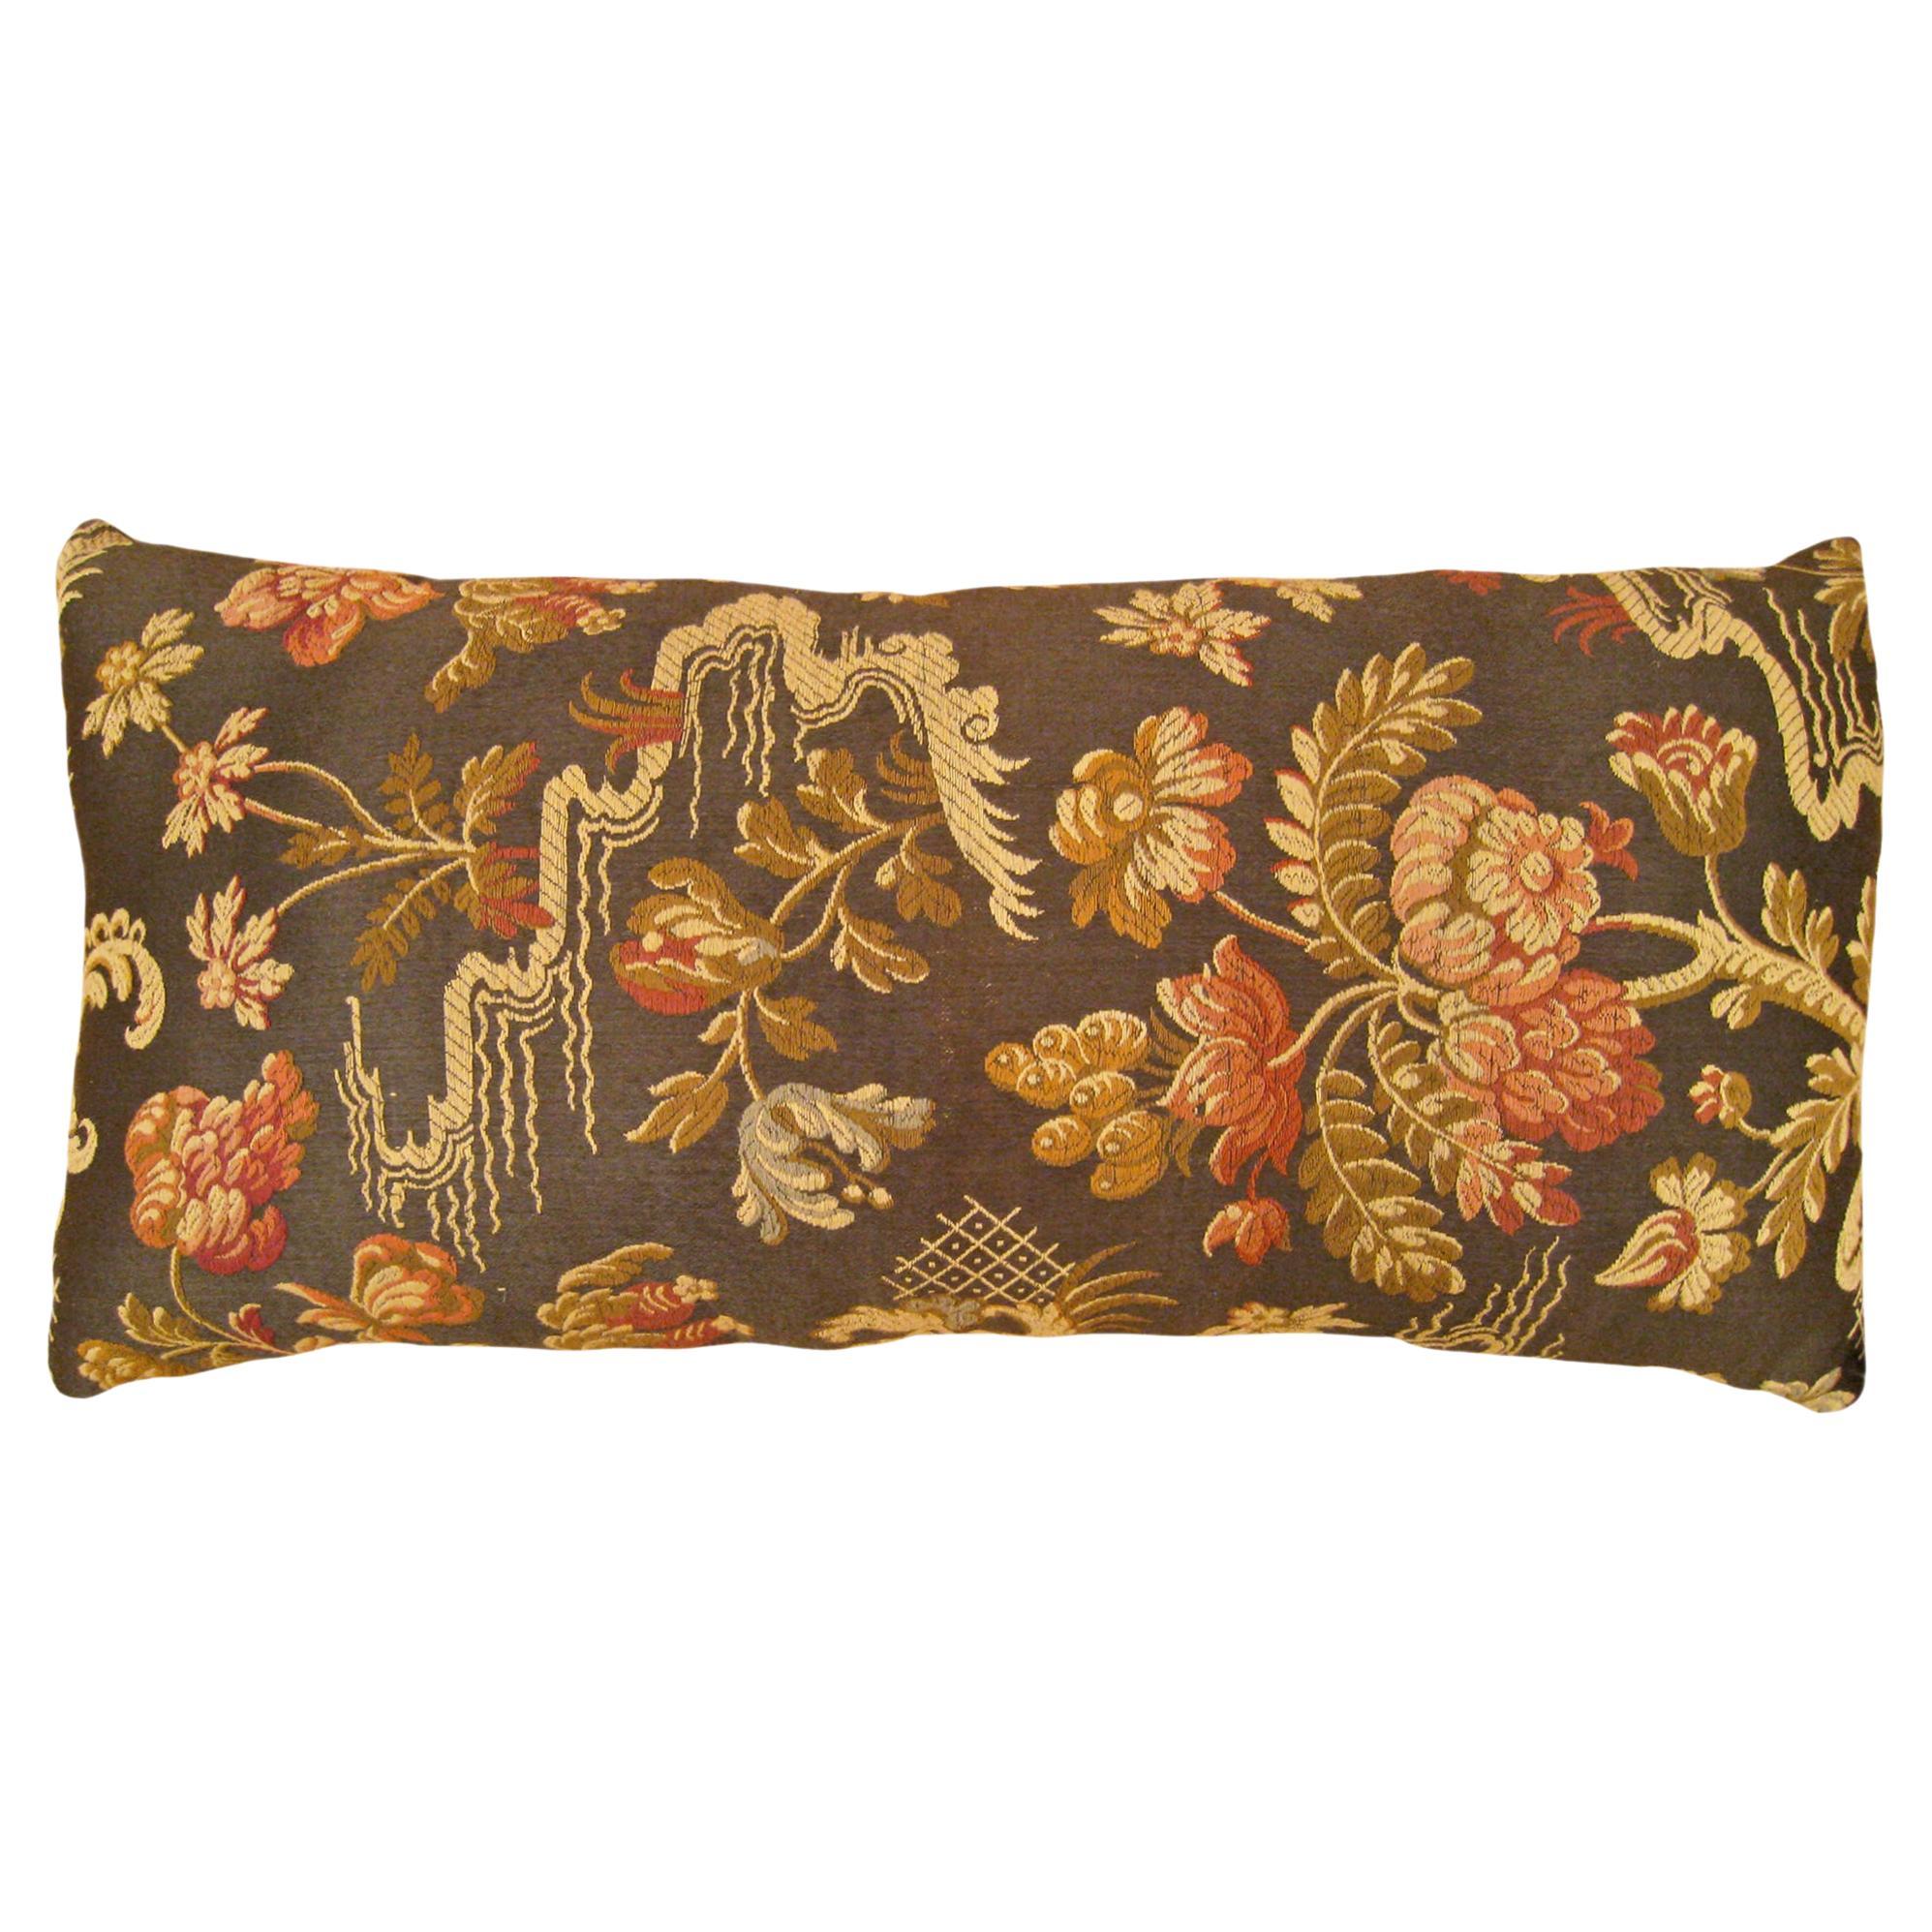 Decorative Antique Jacquard Tapestry Pillow with A Garden Design Allover